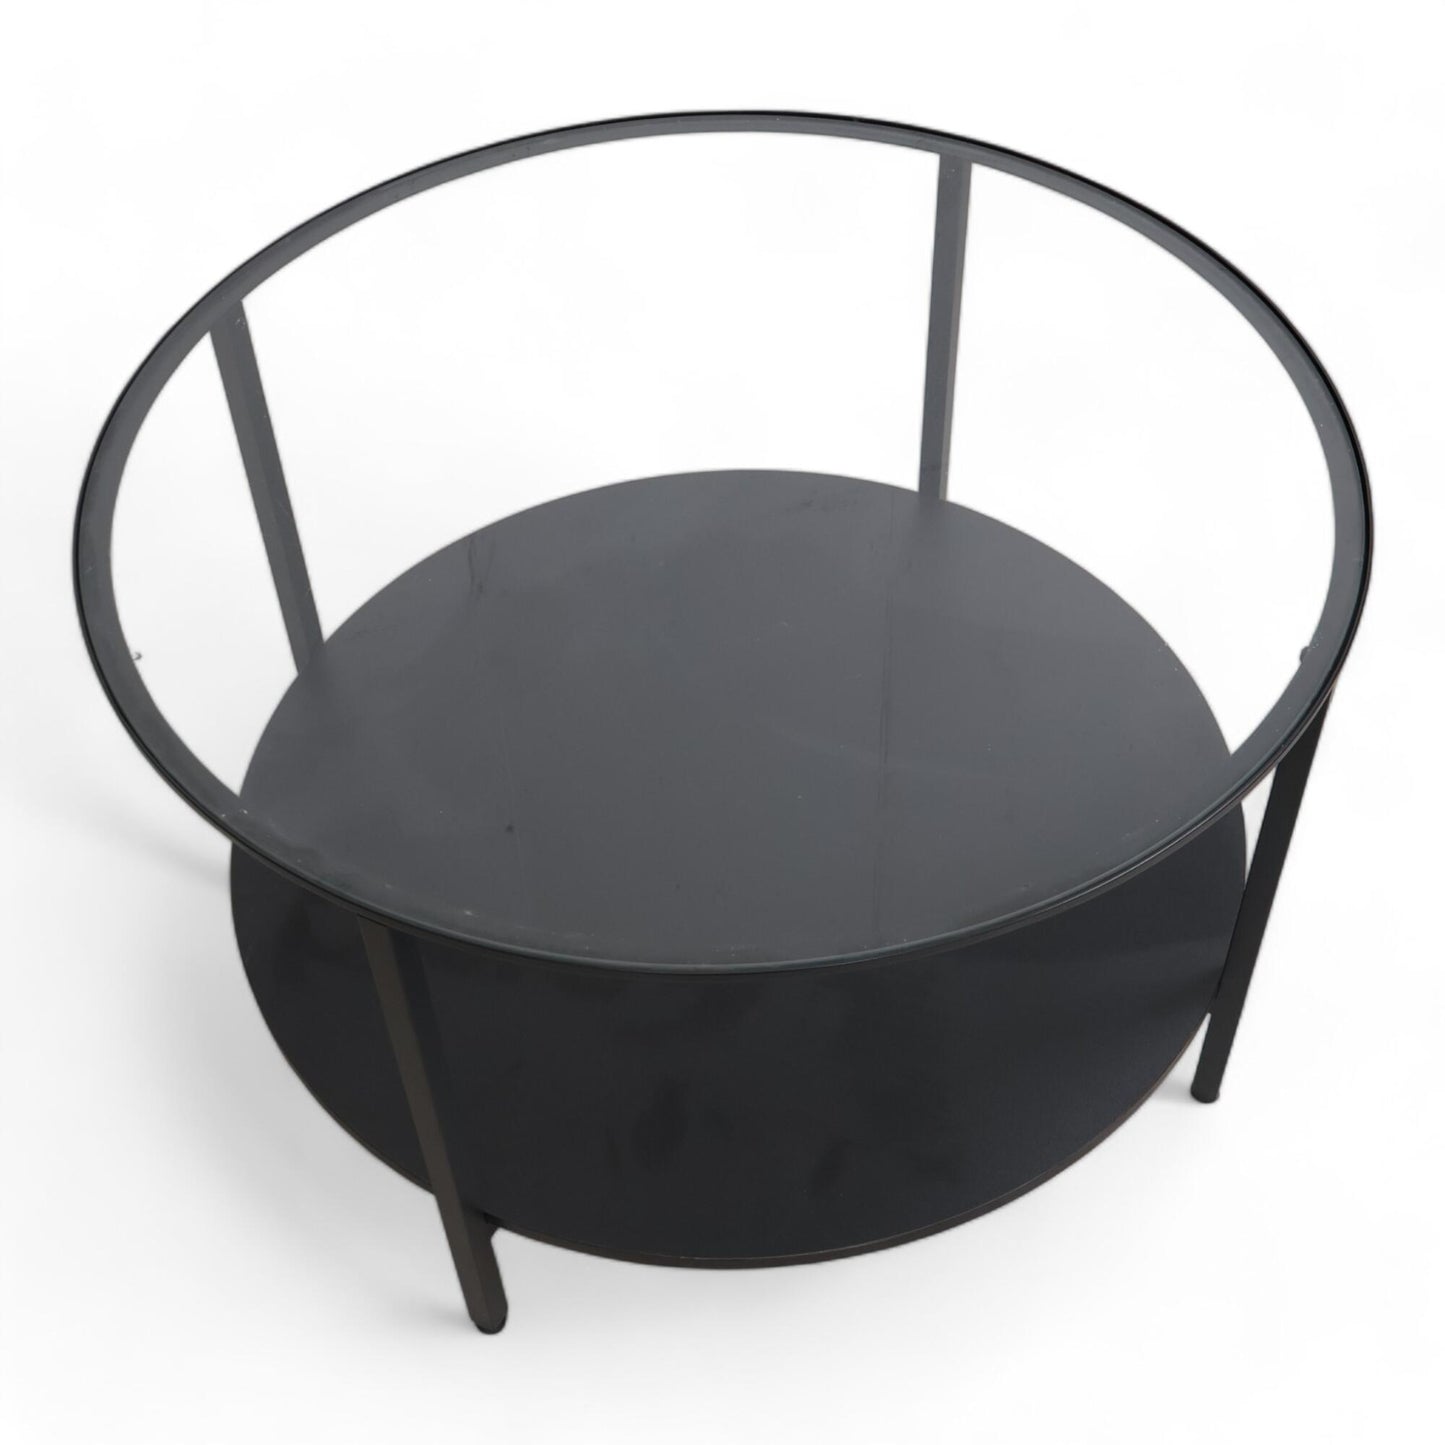 Nyrenset | Ikea VITTSJÖ rundt sofabord i sort